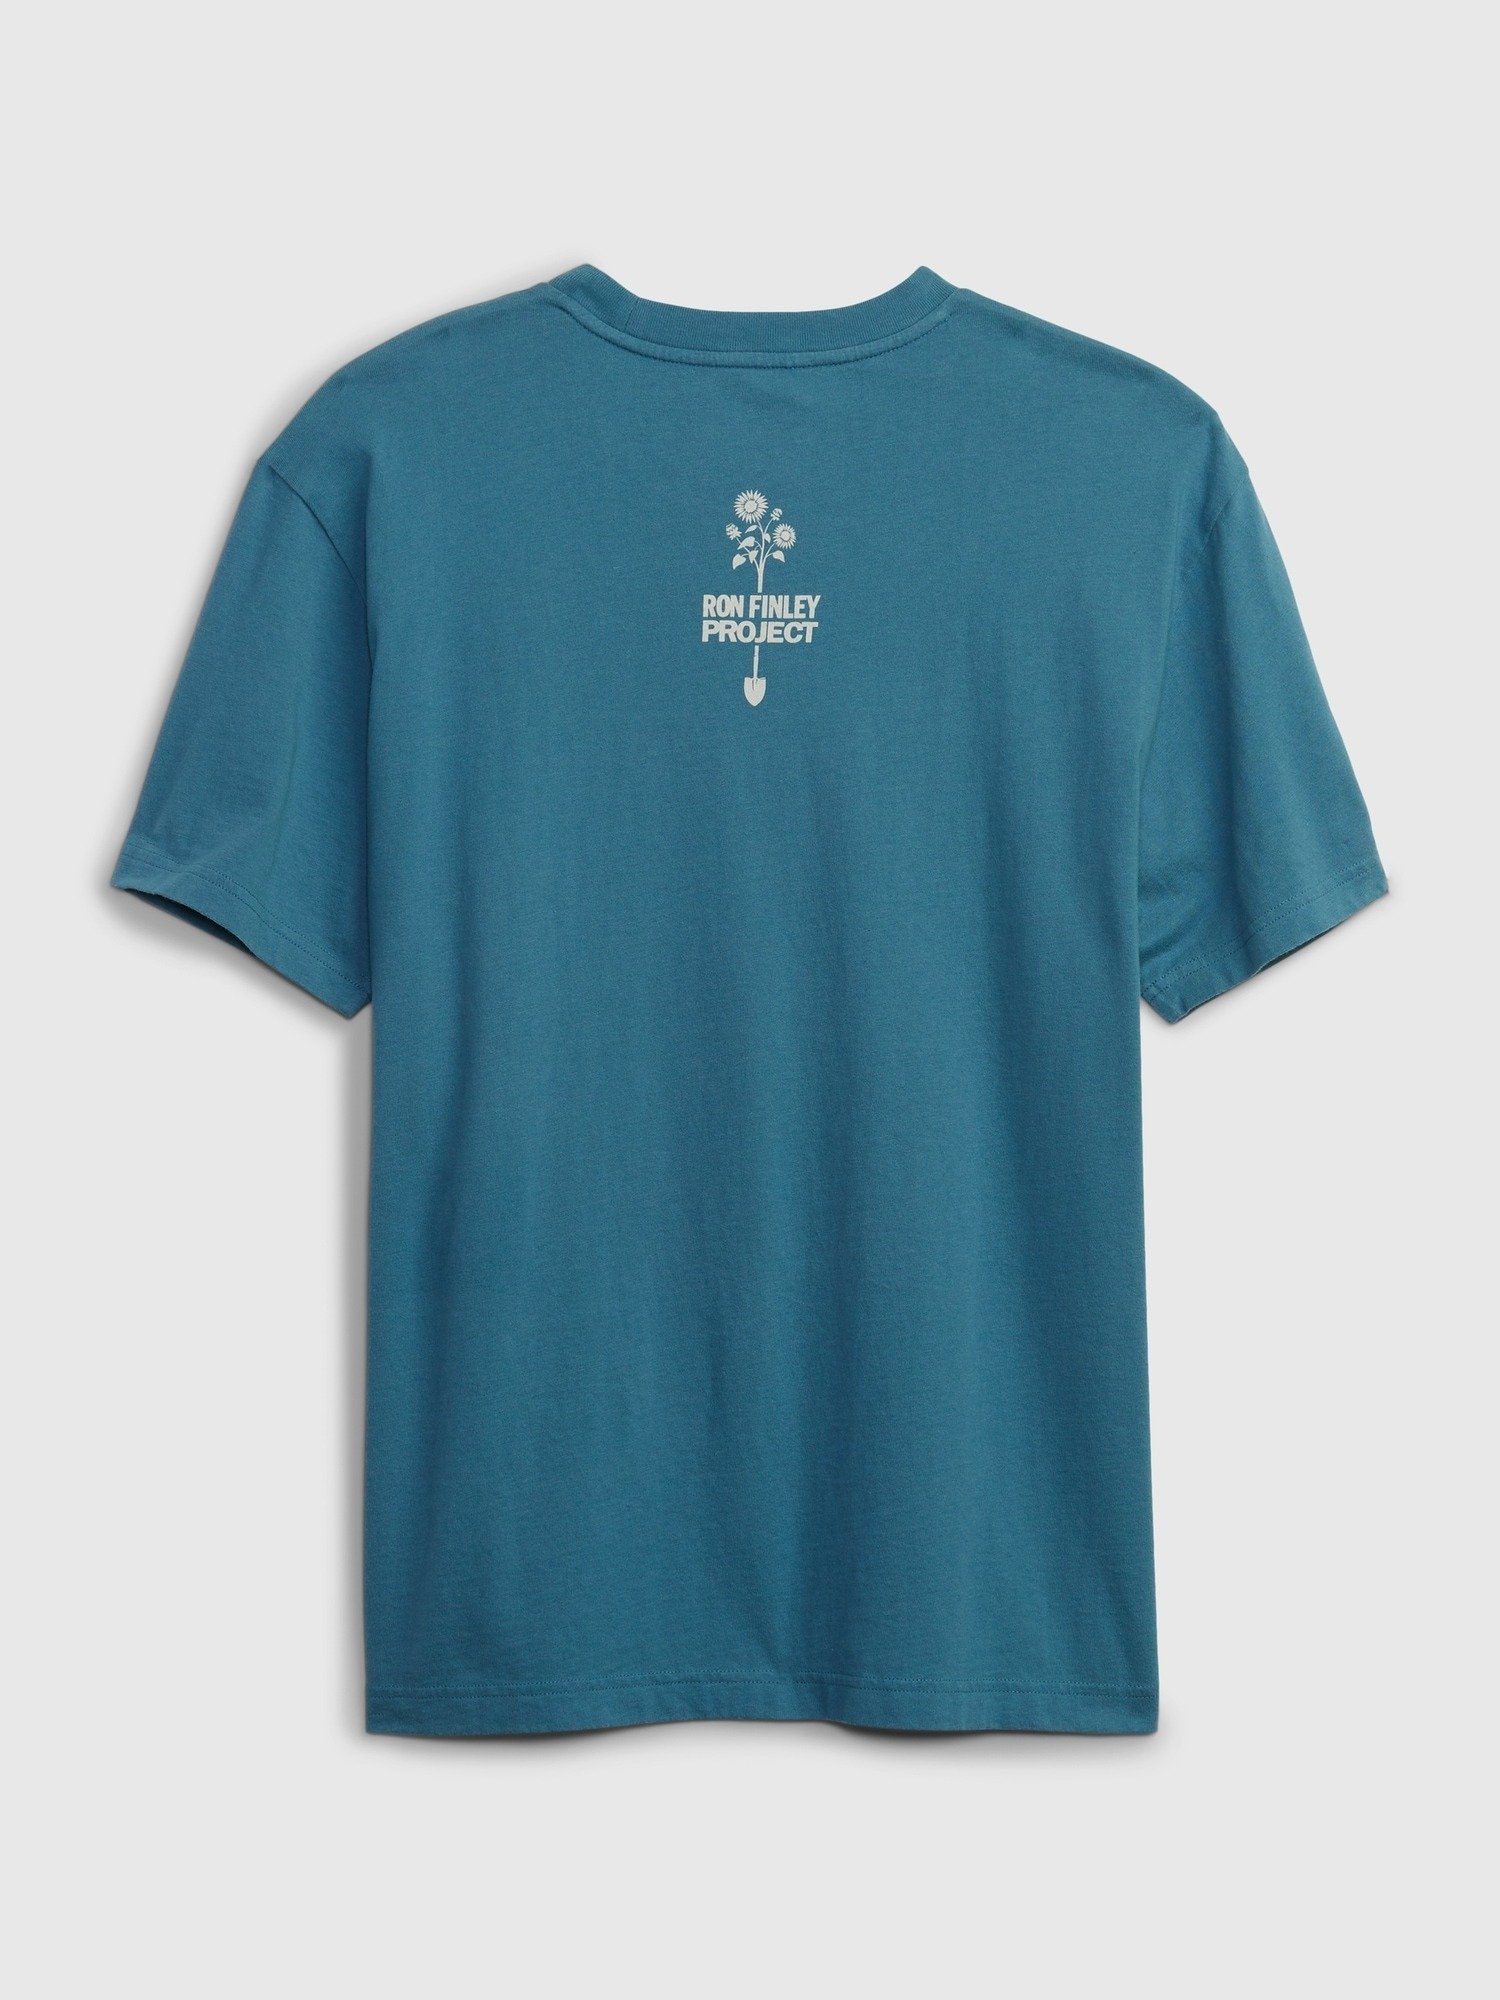 GAP X Ron Finley Grafik Baskılı T-Shirt product image